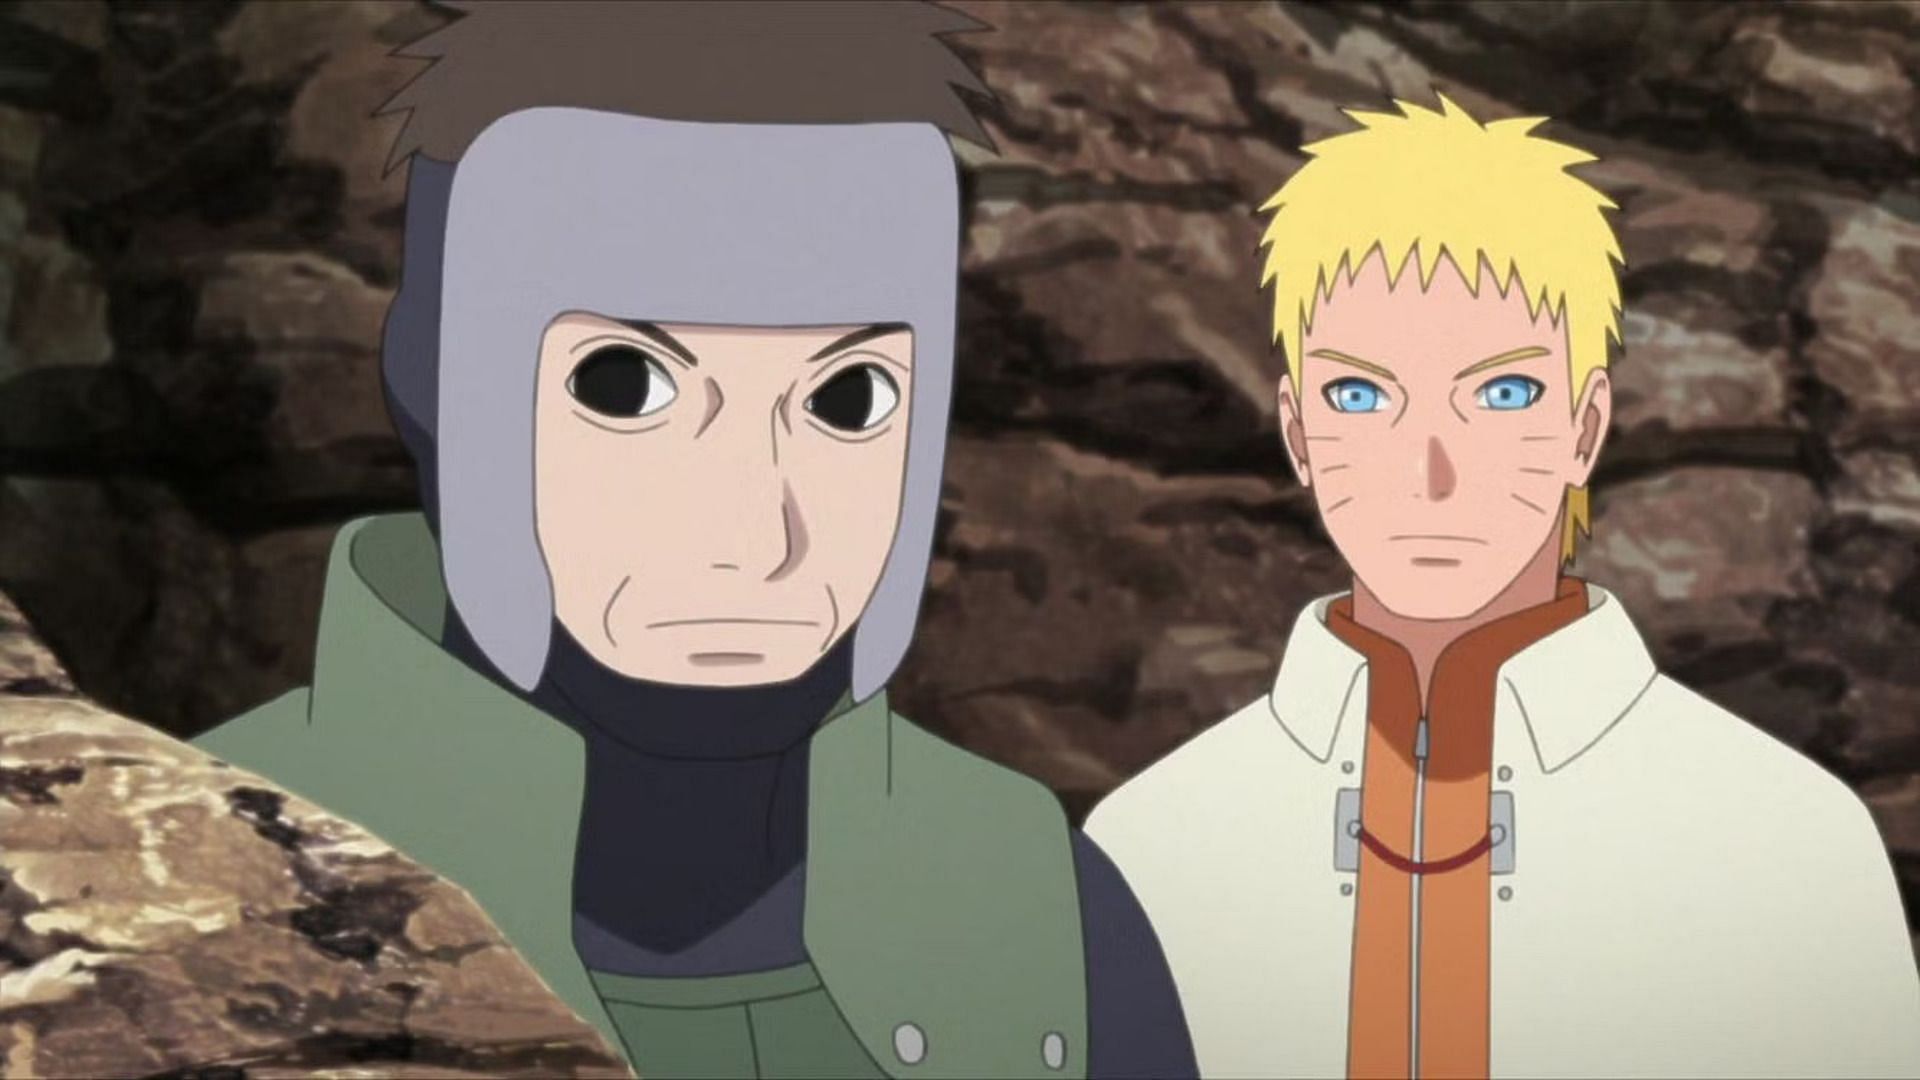 Naruto and Yamato from Naruto (Image via Studio Pierrot Co., Ltd.)